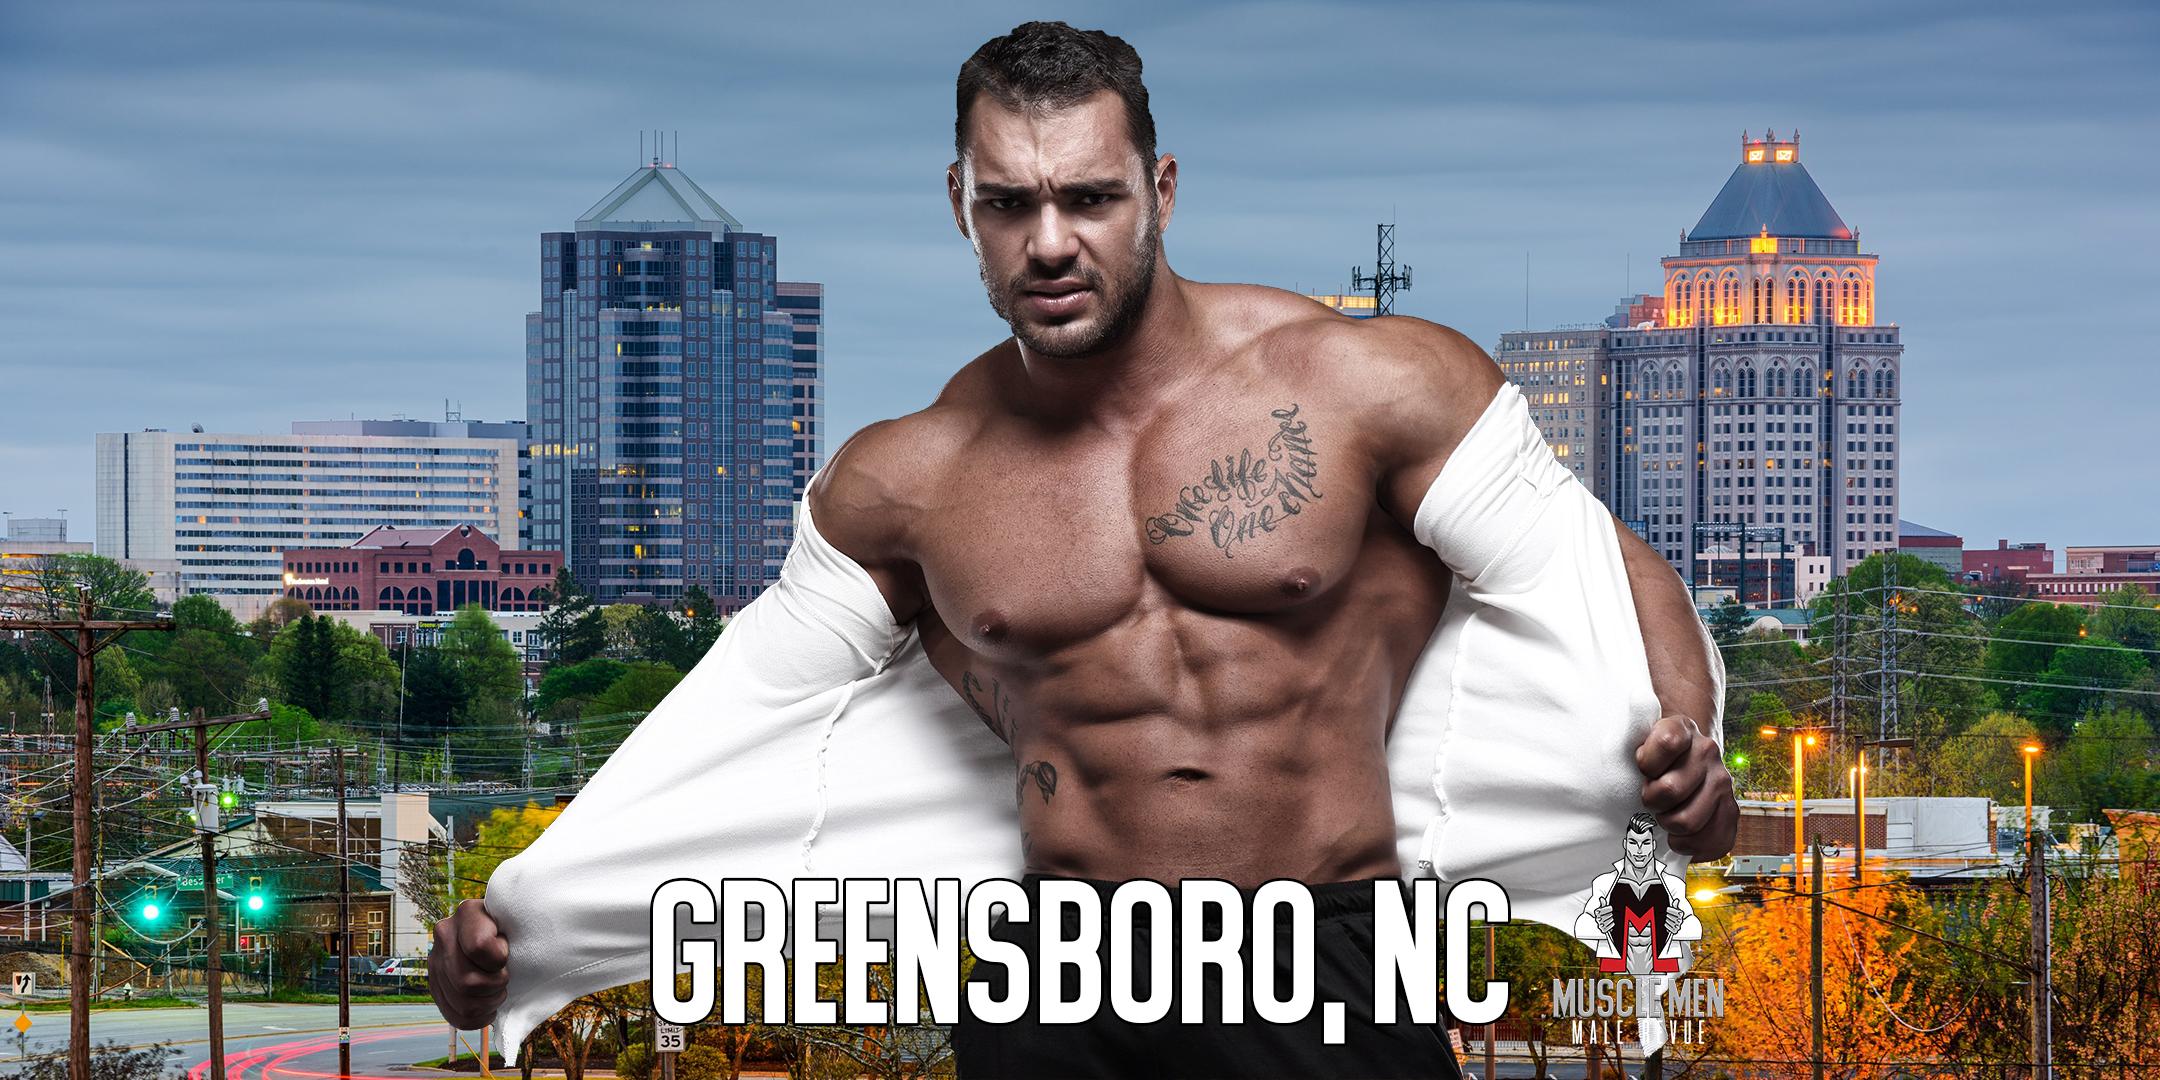 Muscle Men Male Strippers Revue Show & Male Strip Club Shows Greensboro NC 8pm-10pm